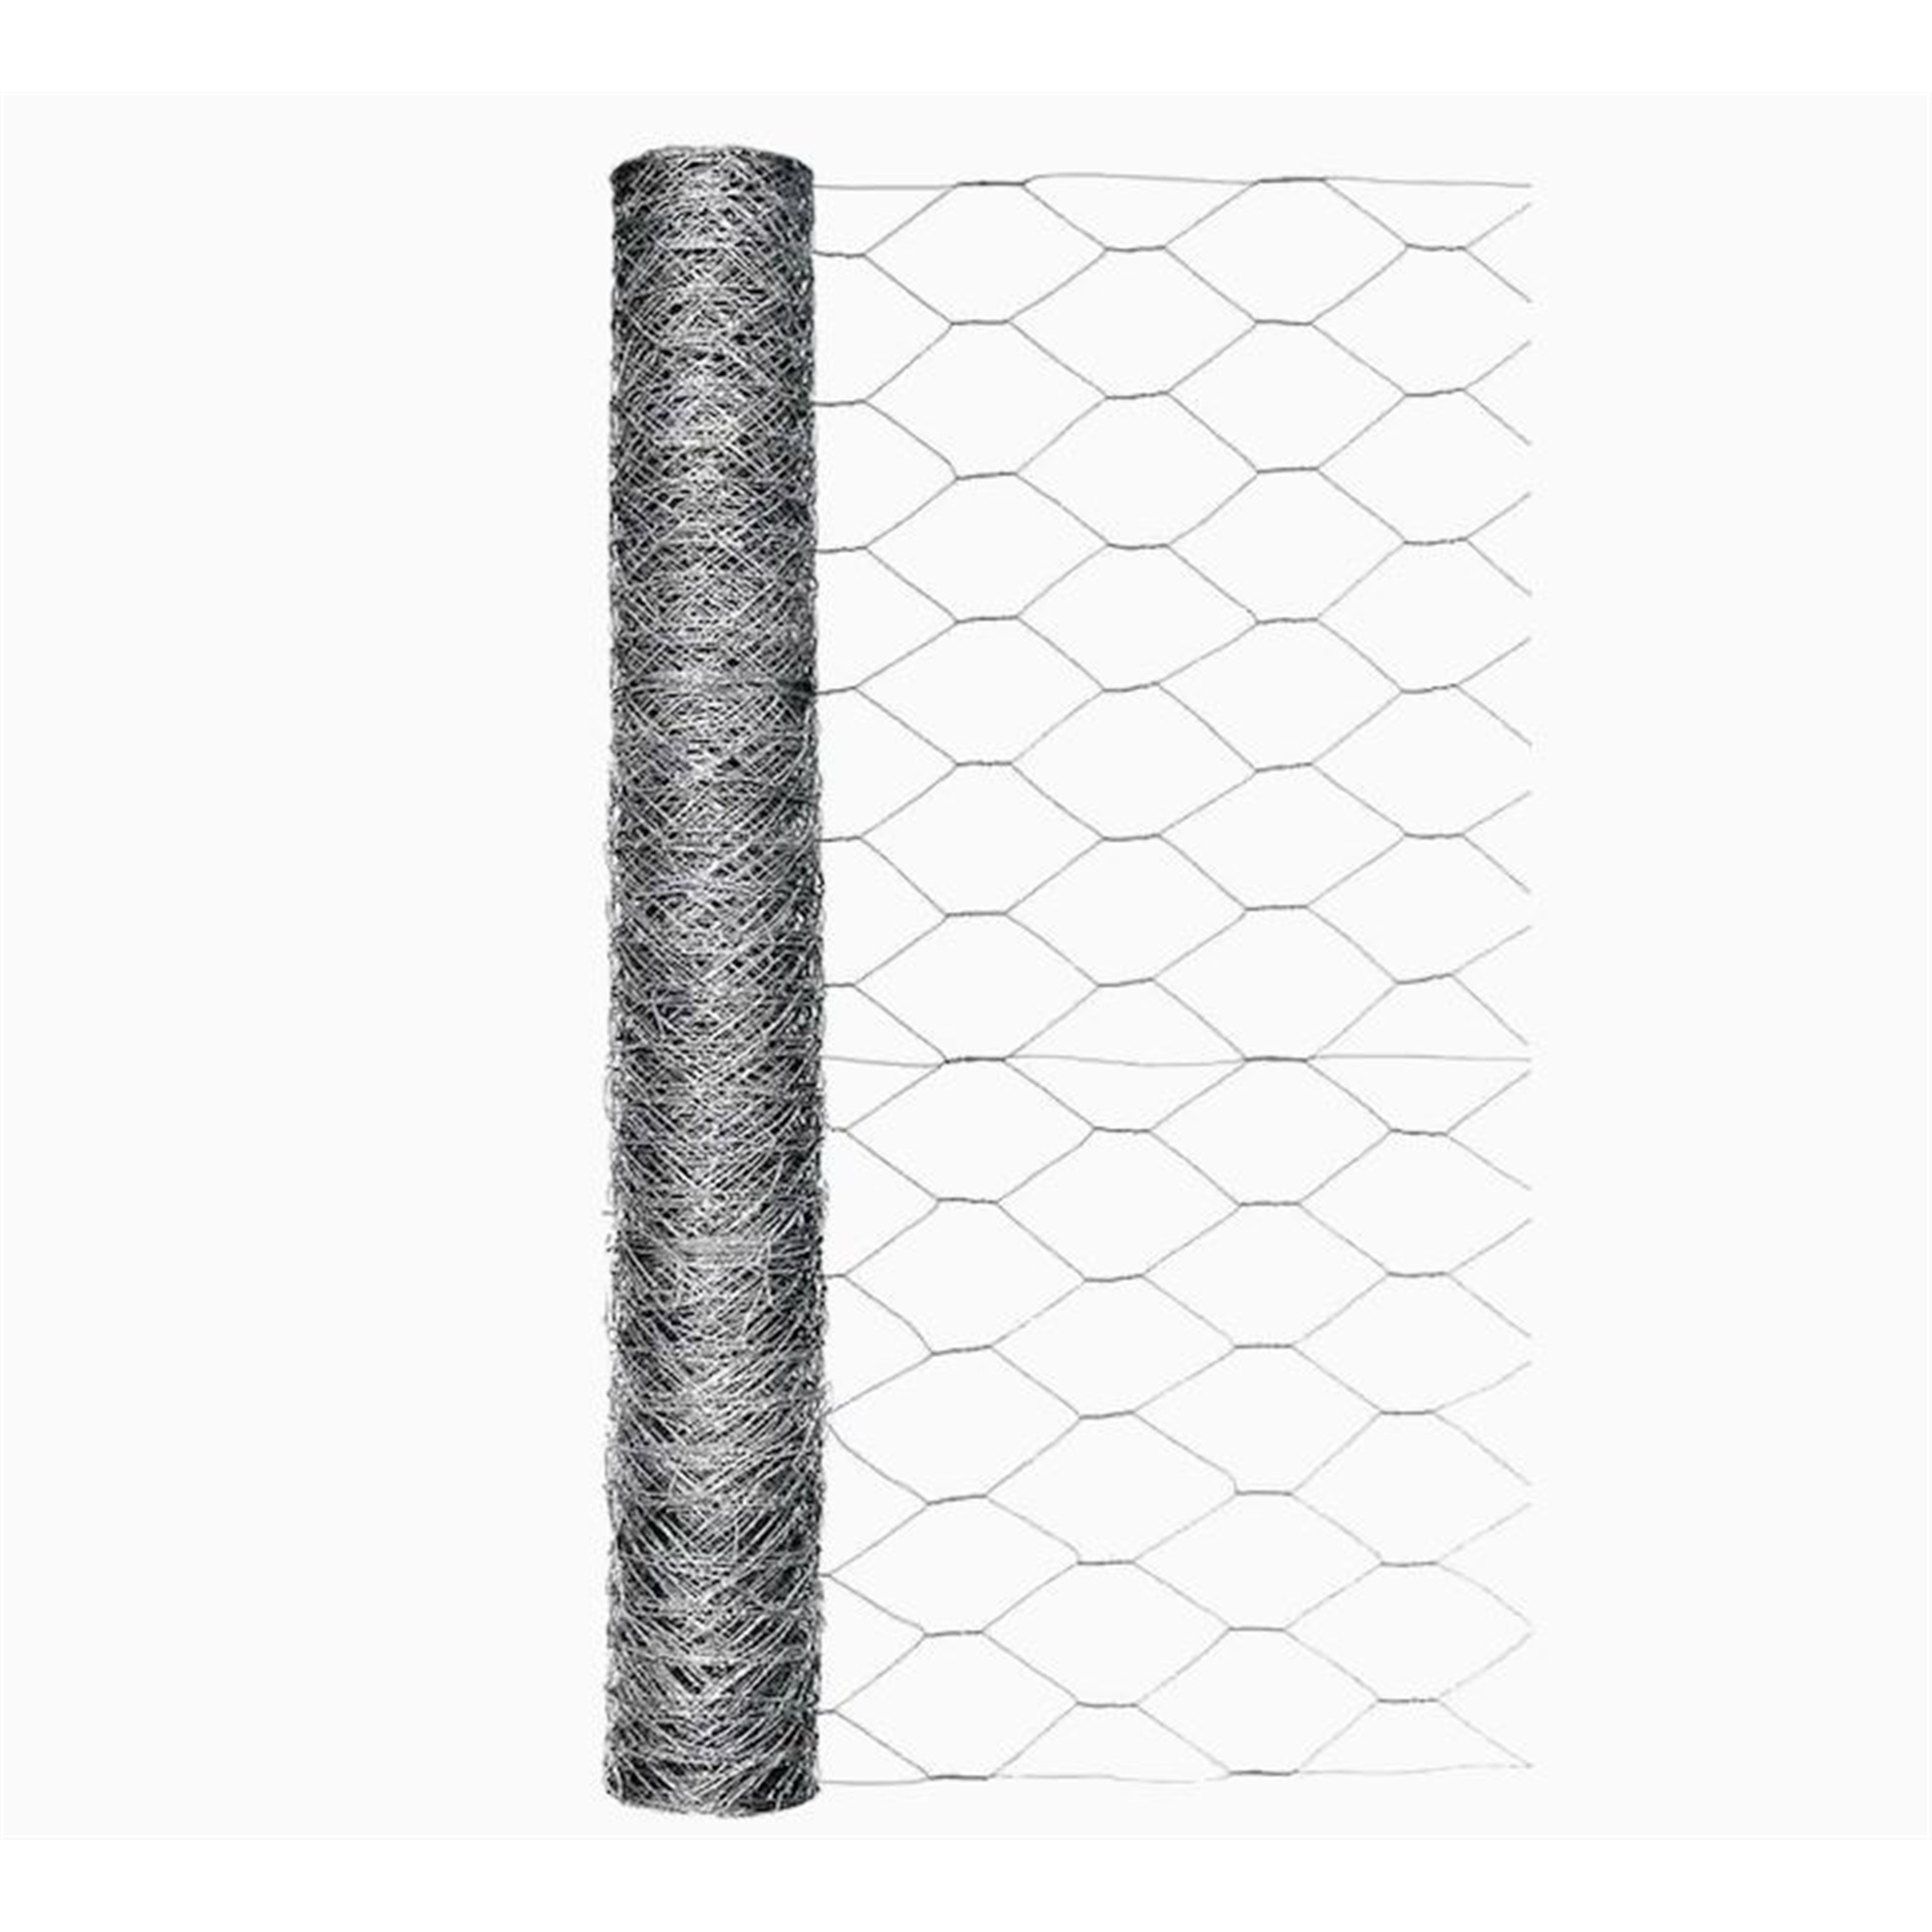 2 ft x 150 ft Black Vinyl Coated Galvanized Wire Animal Control Fence